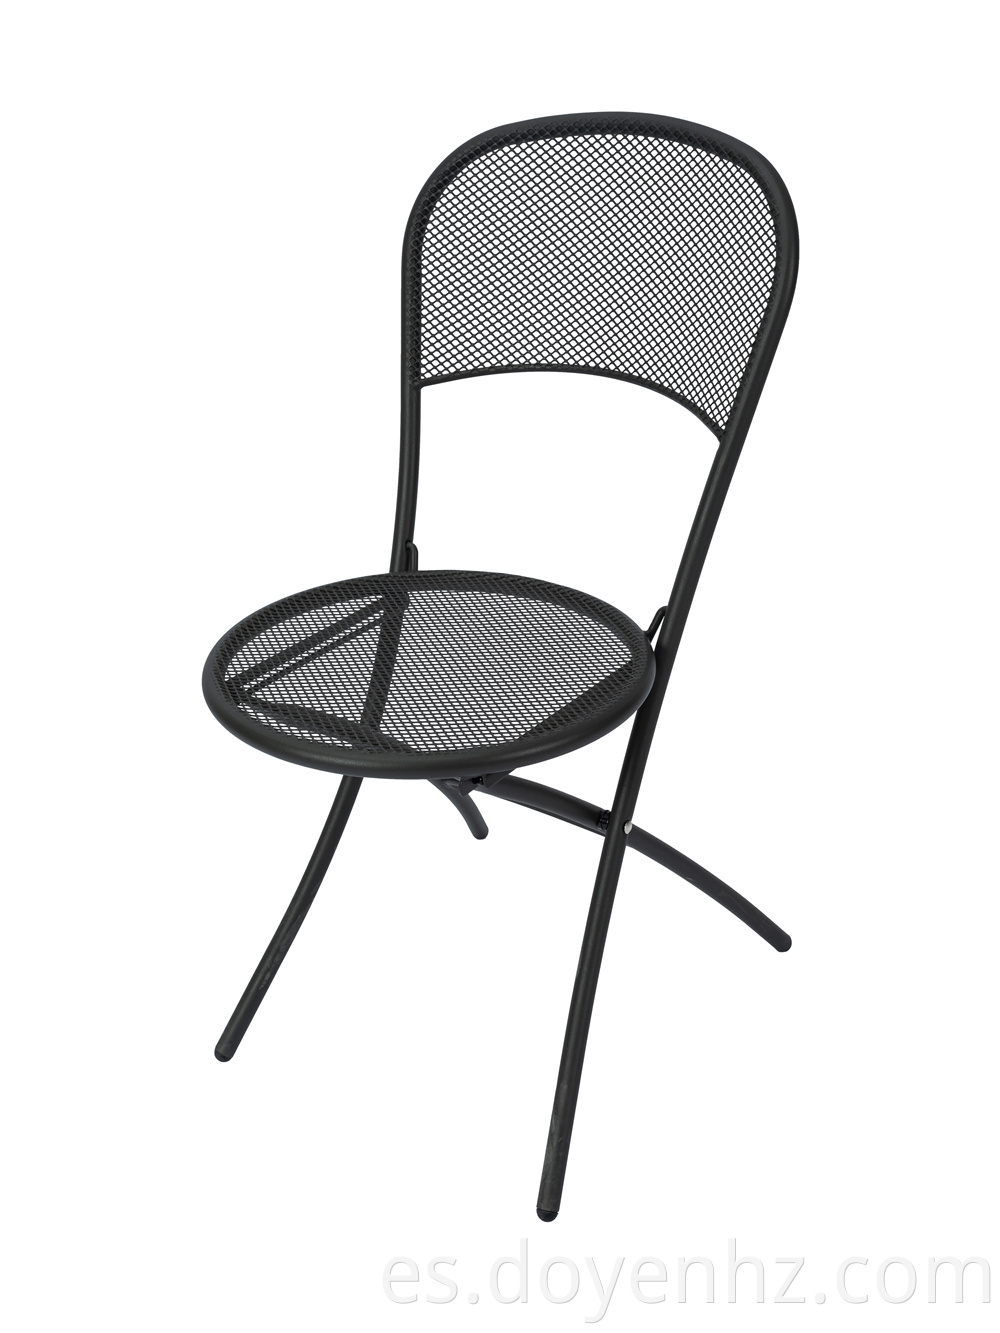 Outdoor Metal Mesh Folding Chair